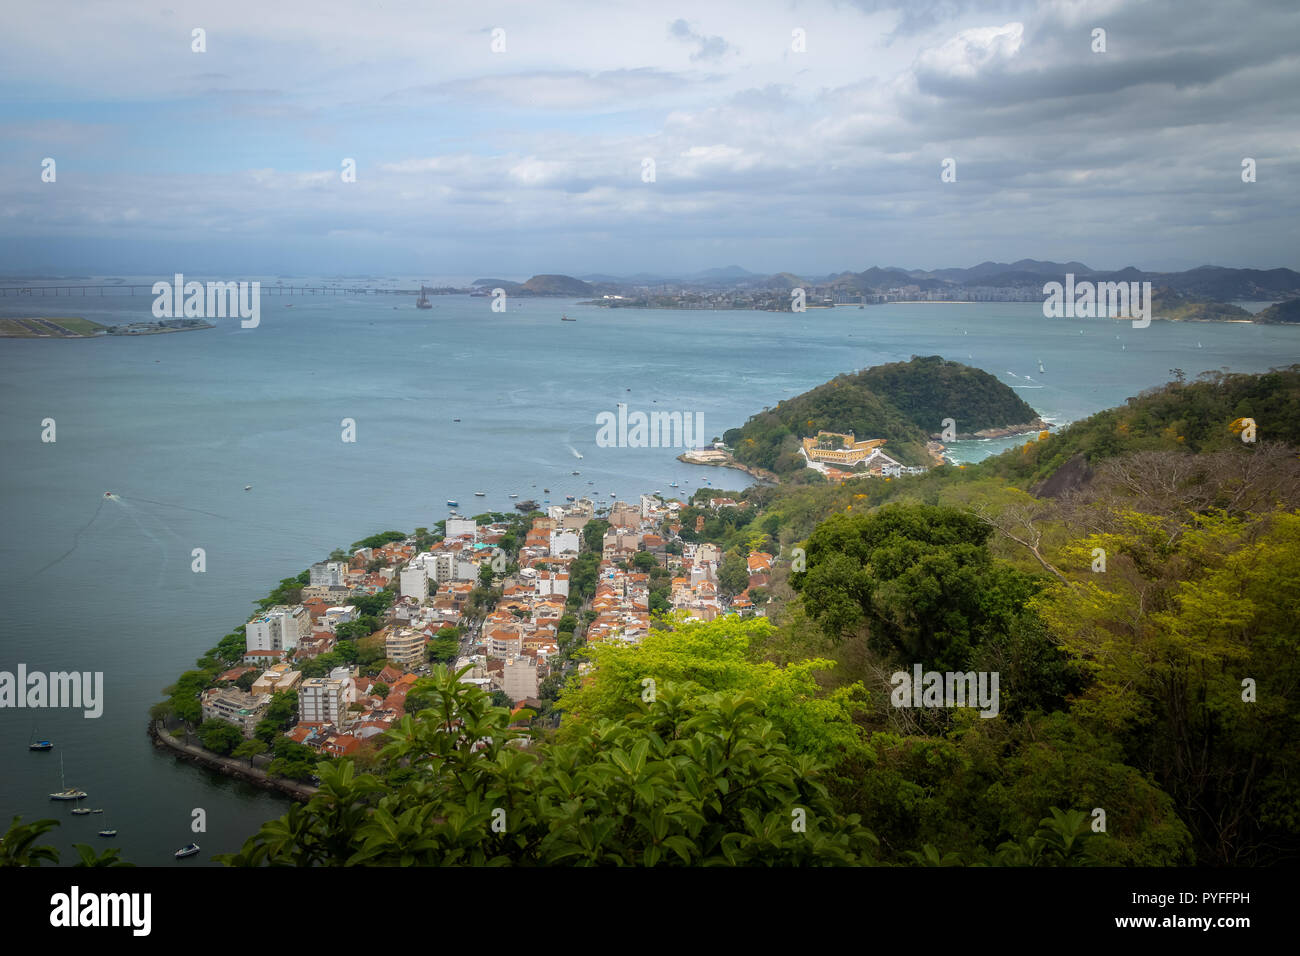 Vista aerea della baia di Guanabara, Urca e Sao Joao Fortezza - Rio de Janeiro, Brasile Foto Stock